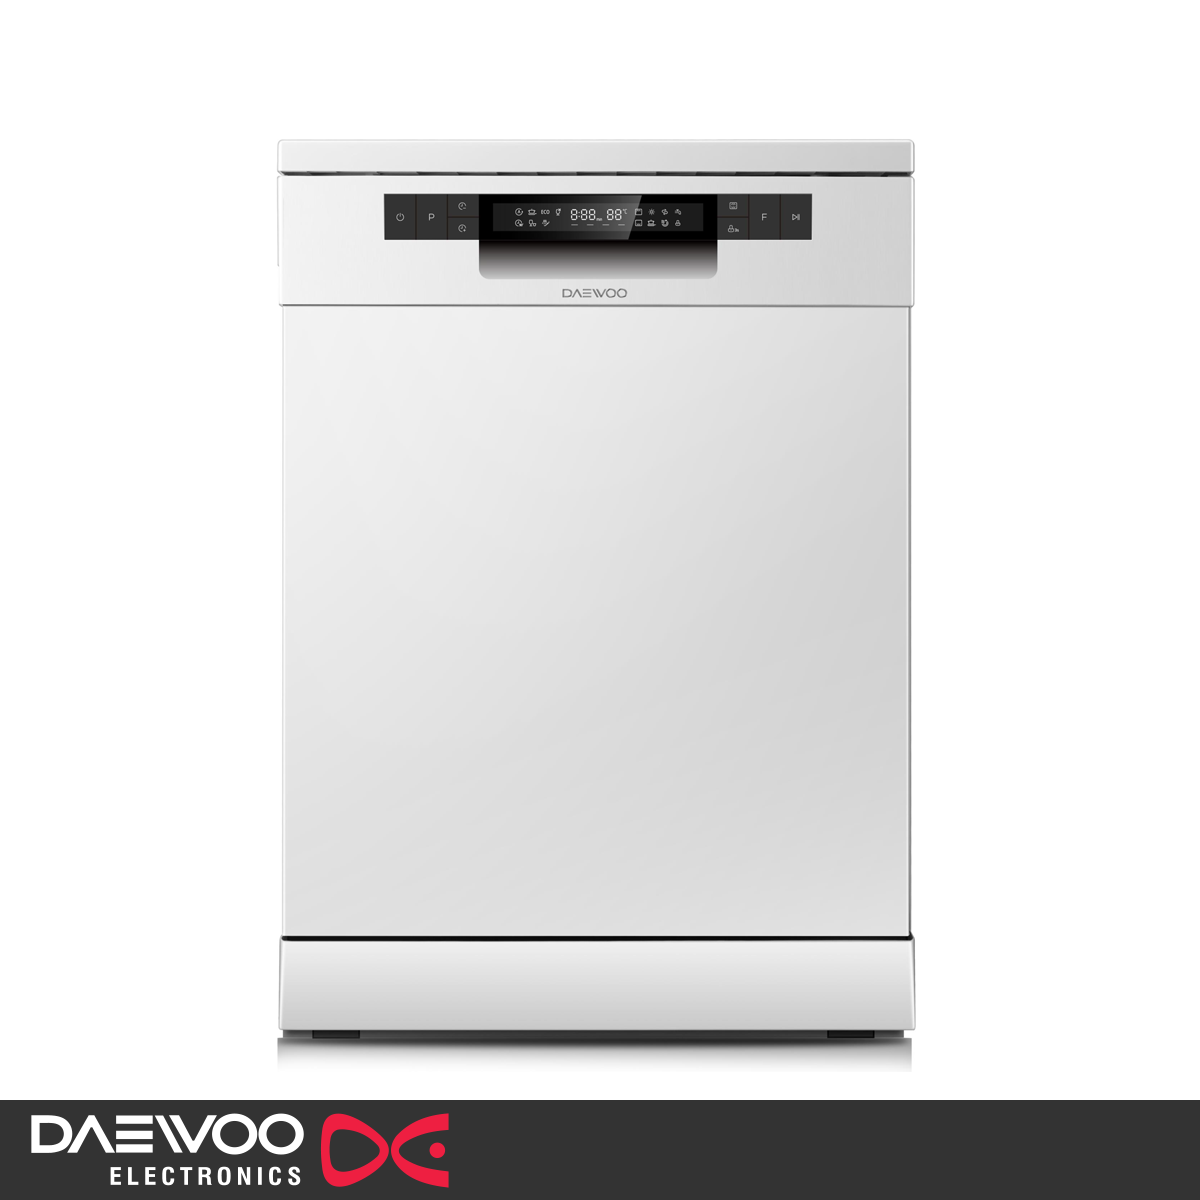 ماشین ظرفشویی دوو 14 نفره مدل DDW-4470